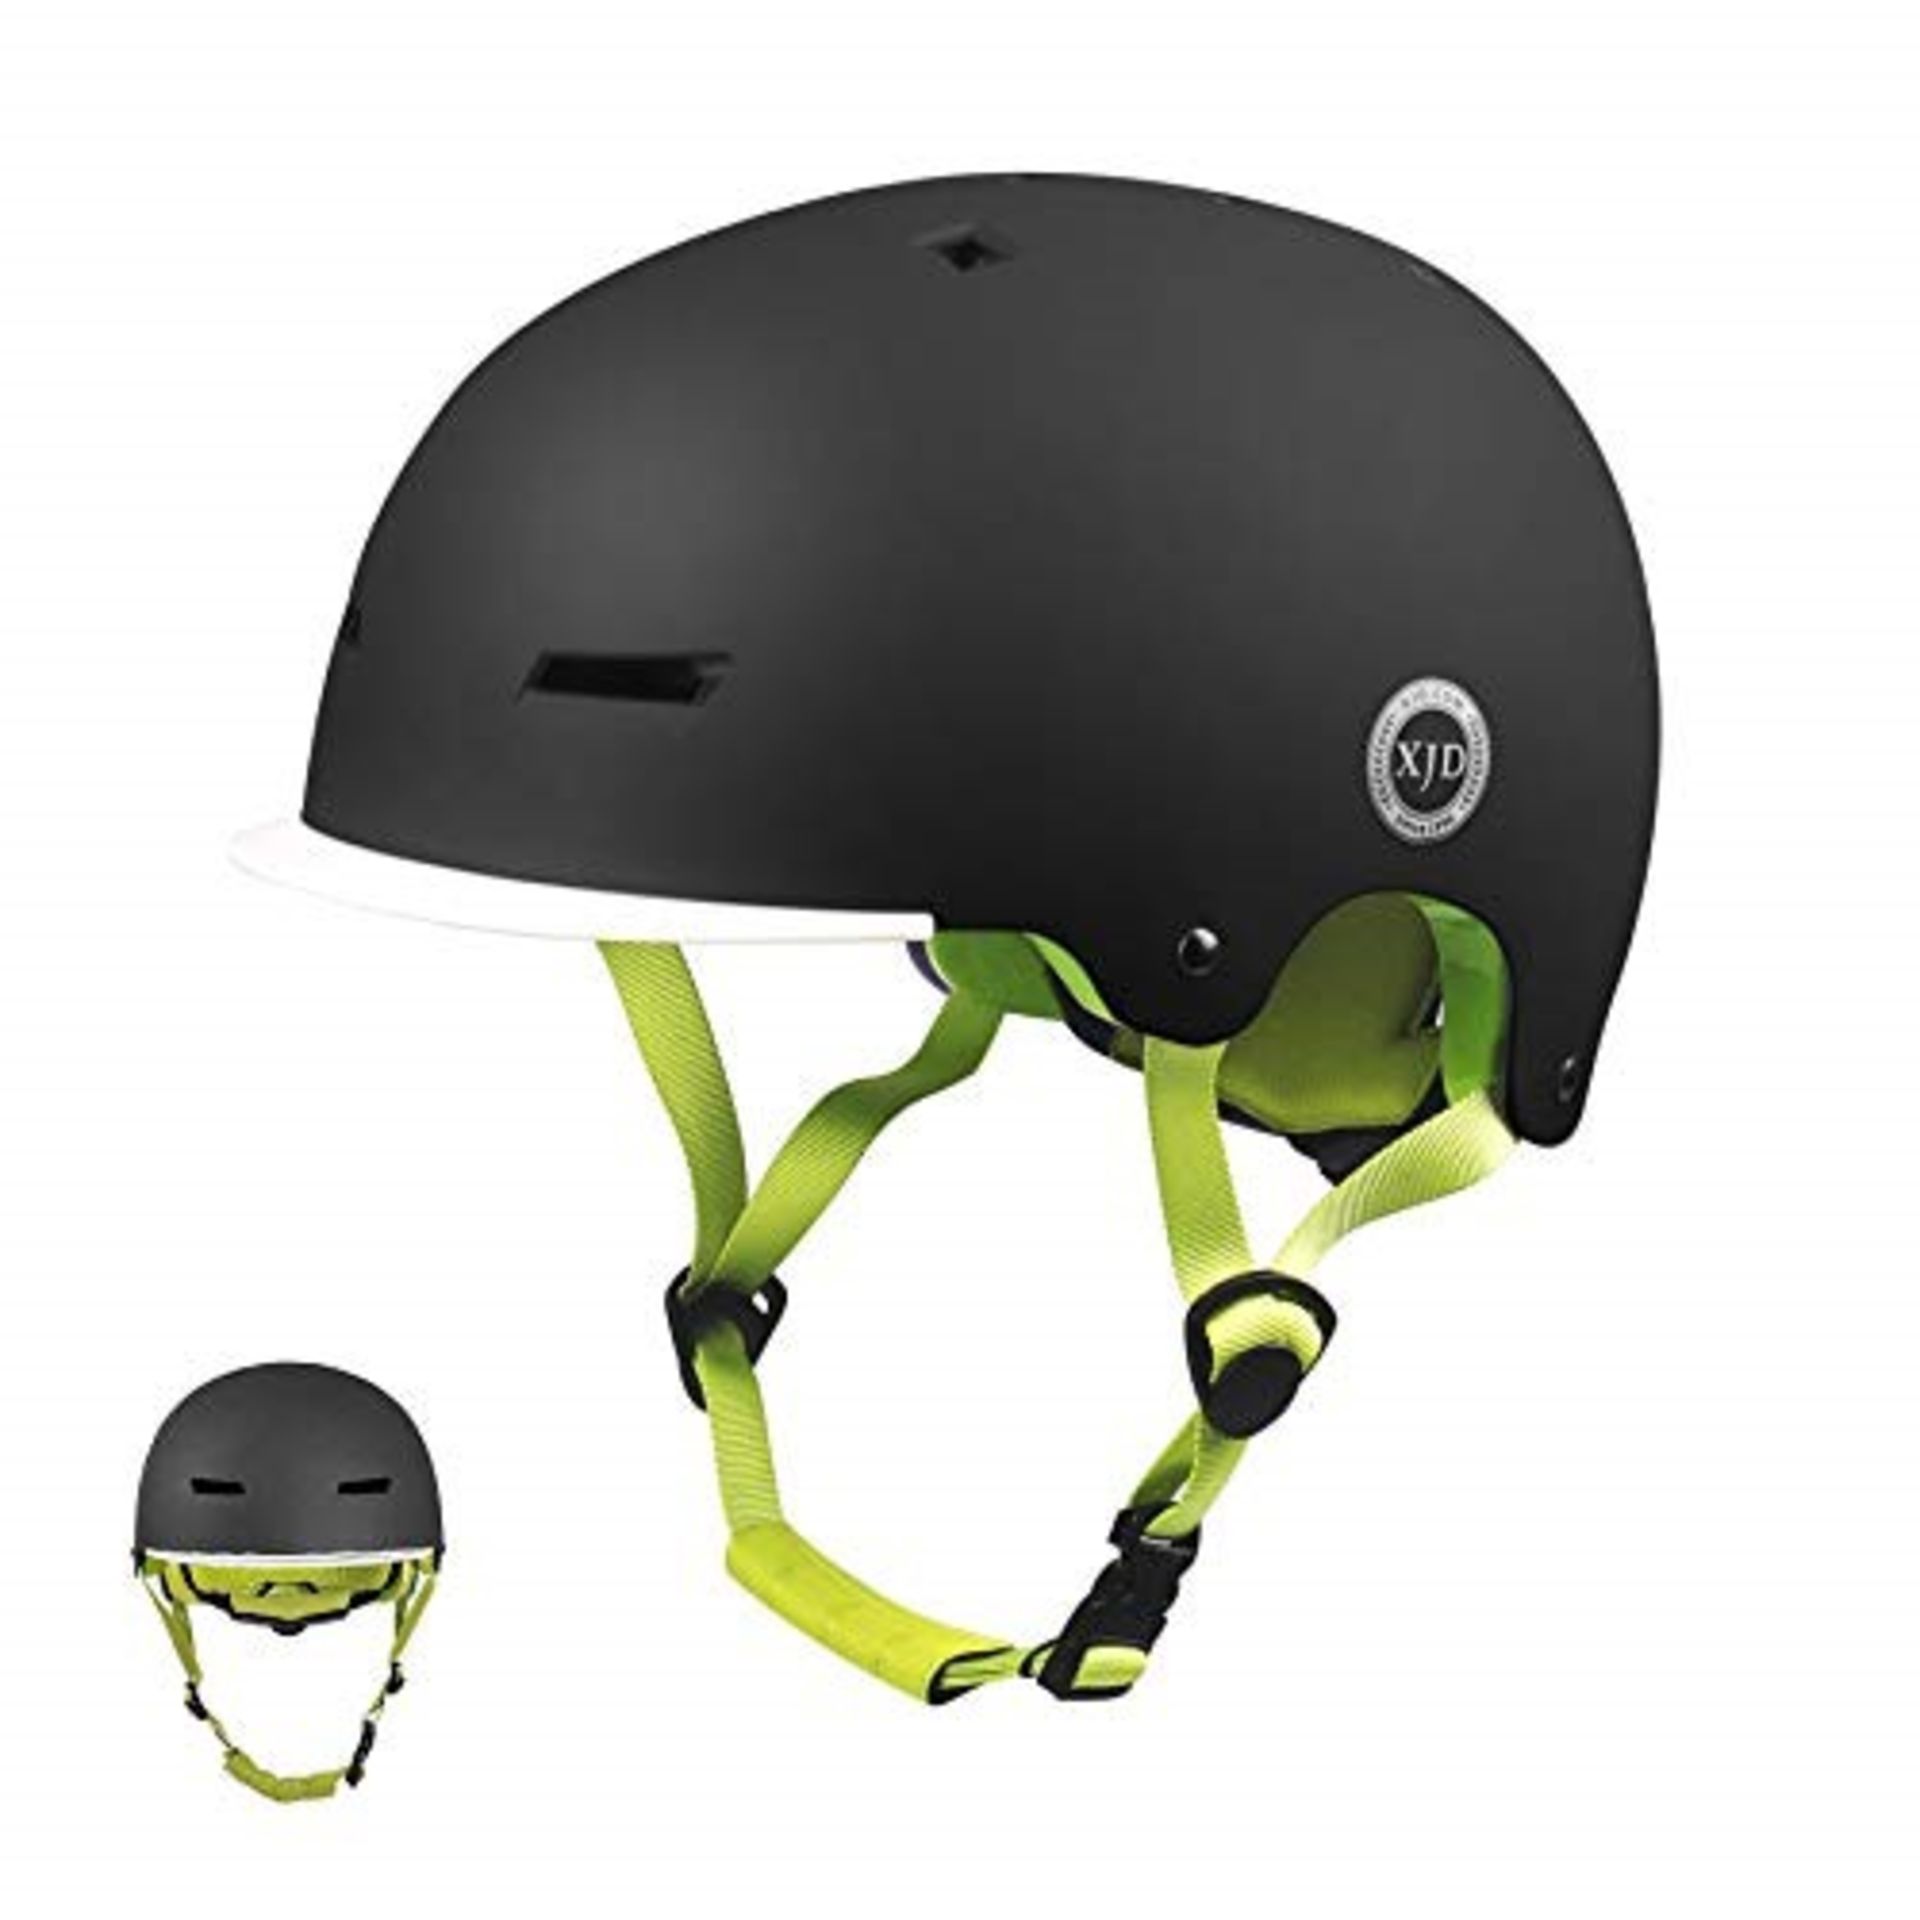 XJD Kids Helmet Toddlers Bike Helmet Adjustable Skateboard Helmet CE Certified Impact